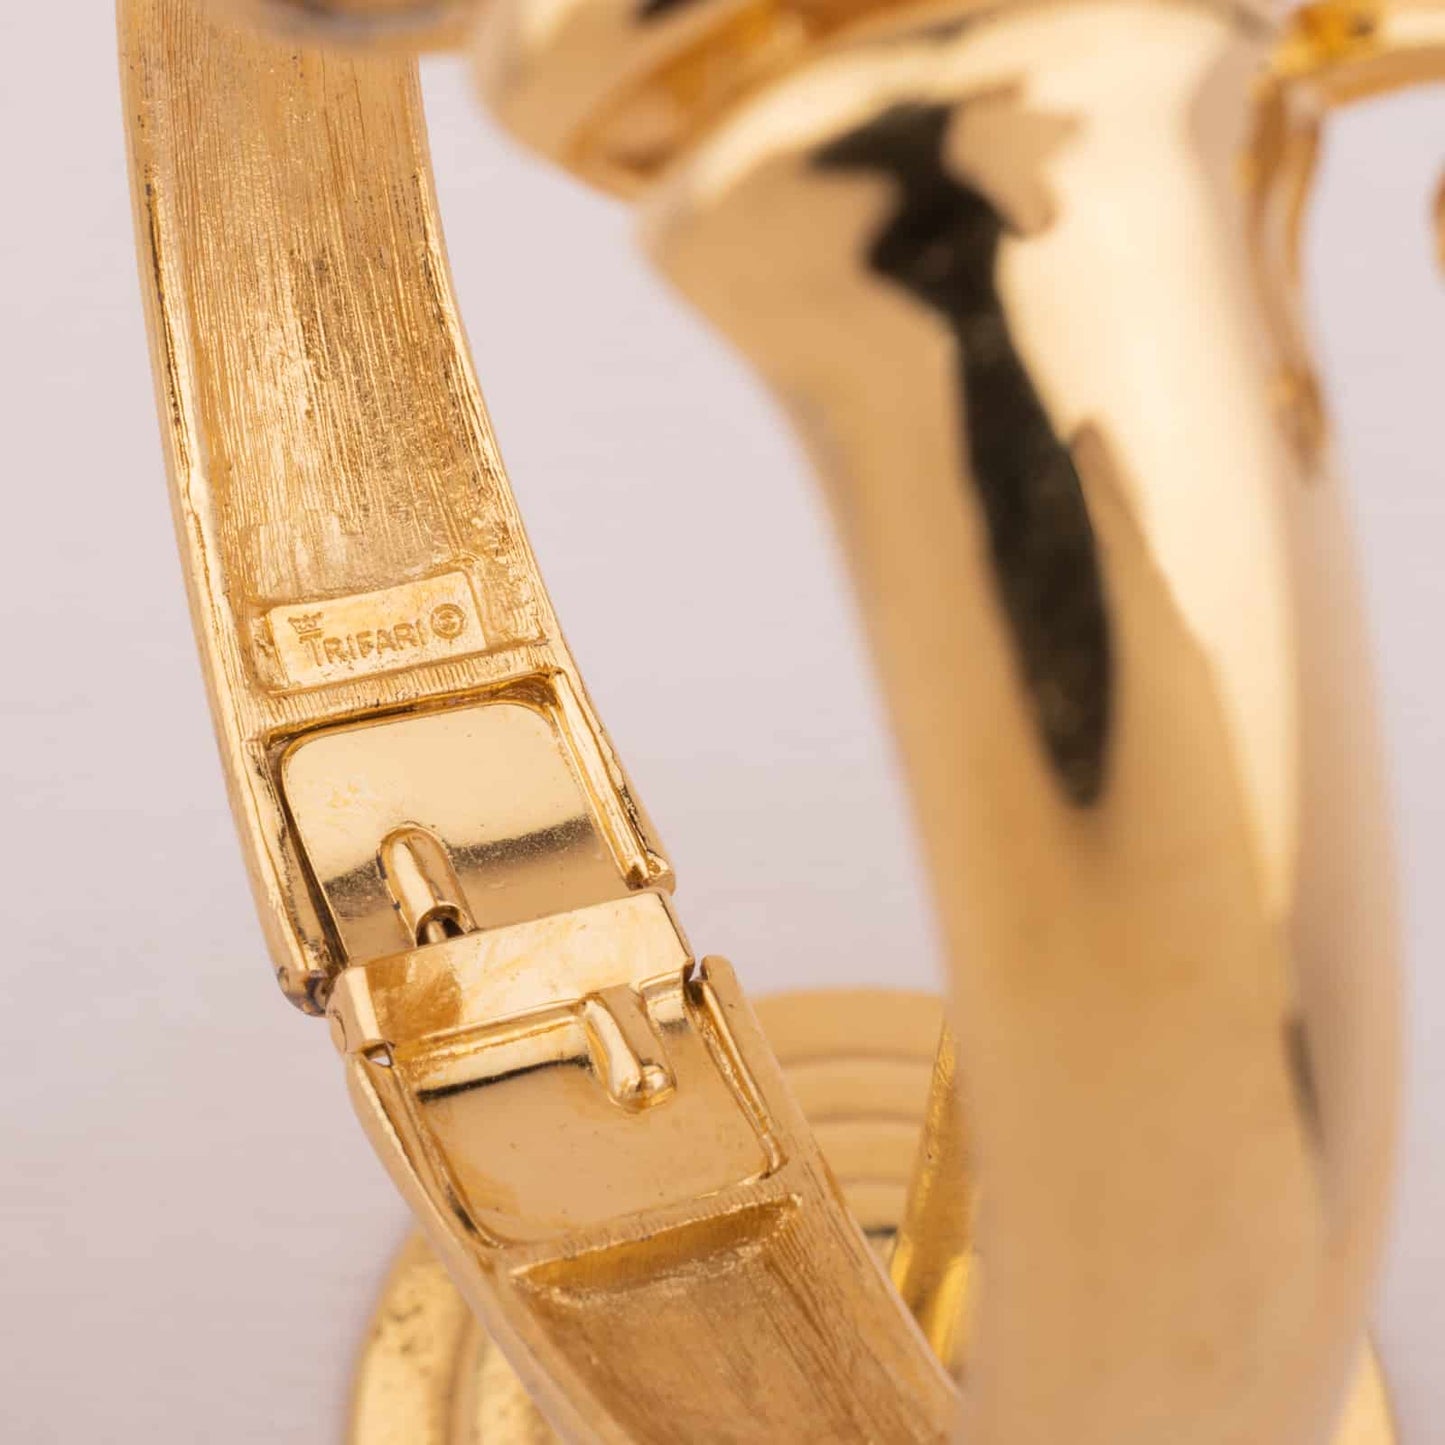 TRIFARI gold-plated vintage bangle 